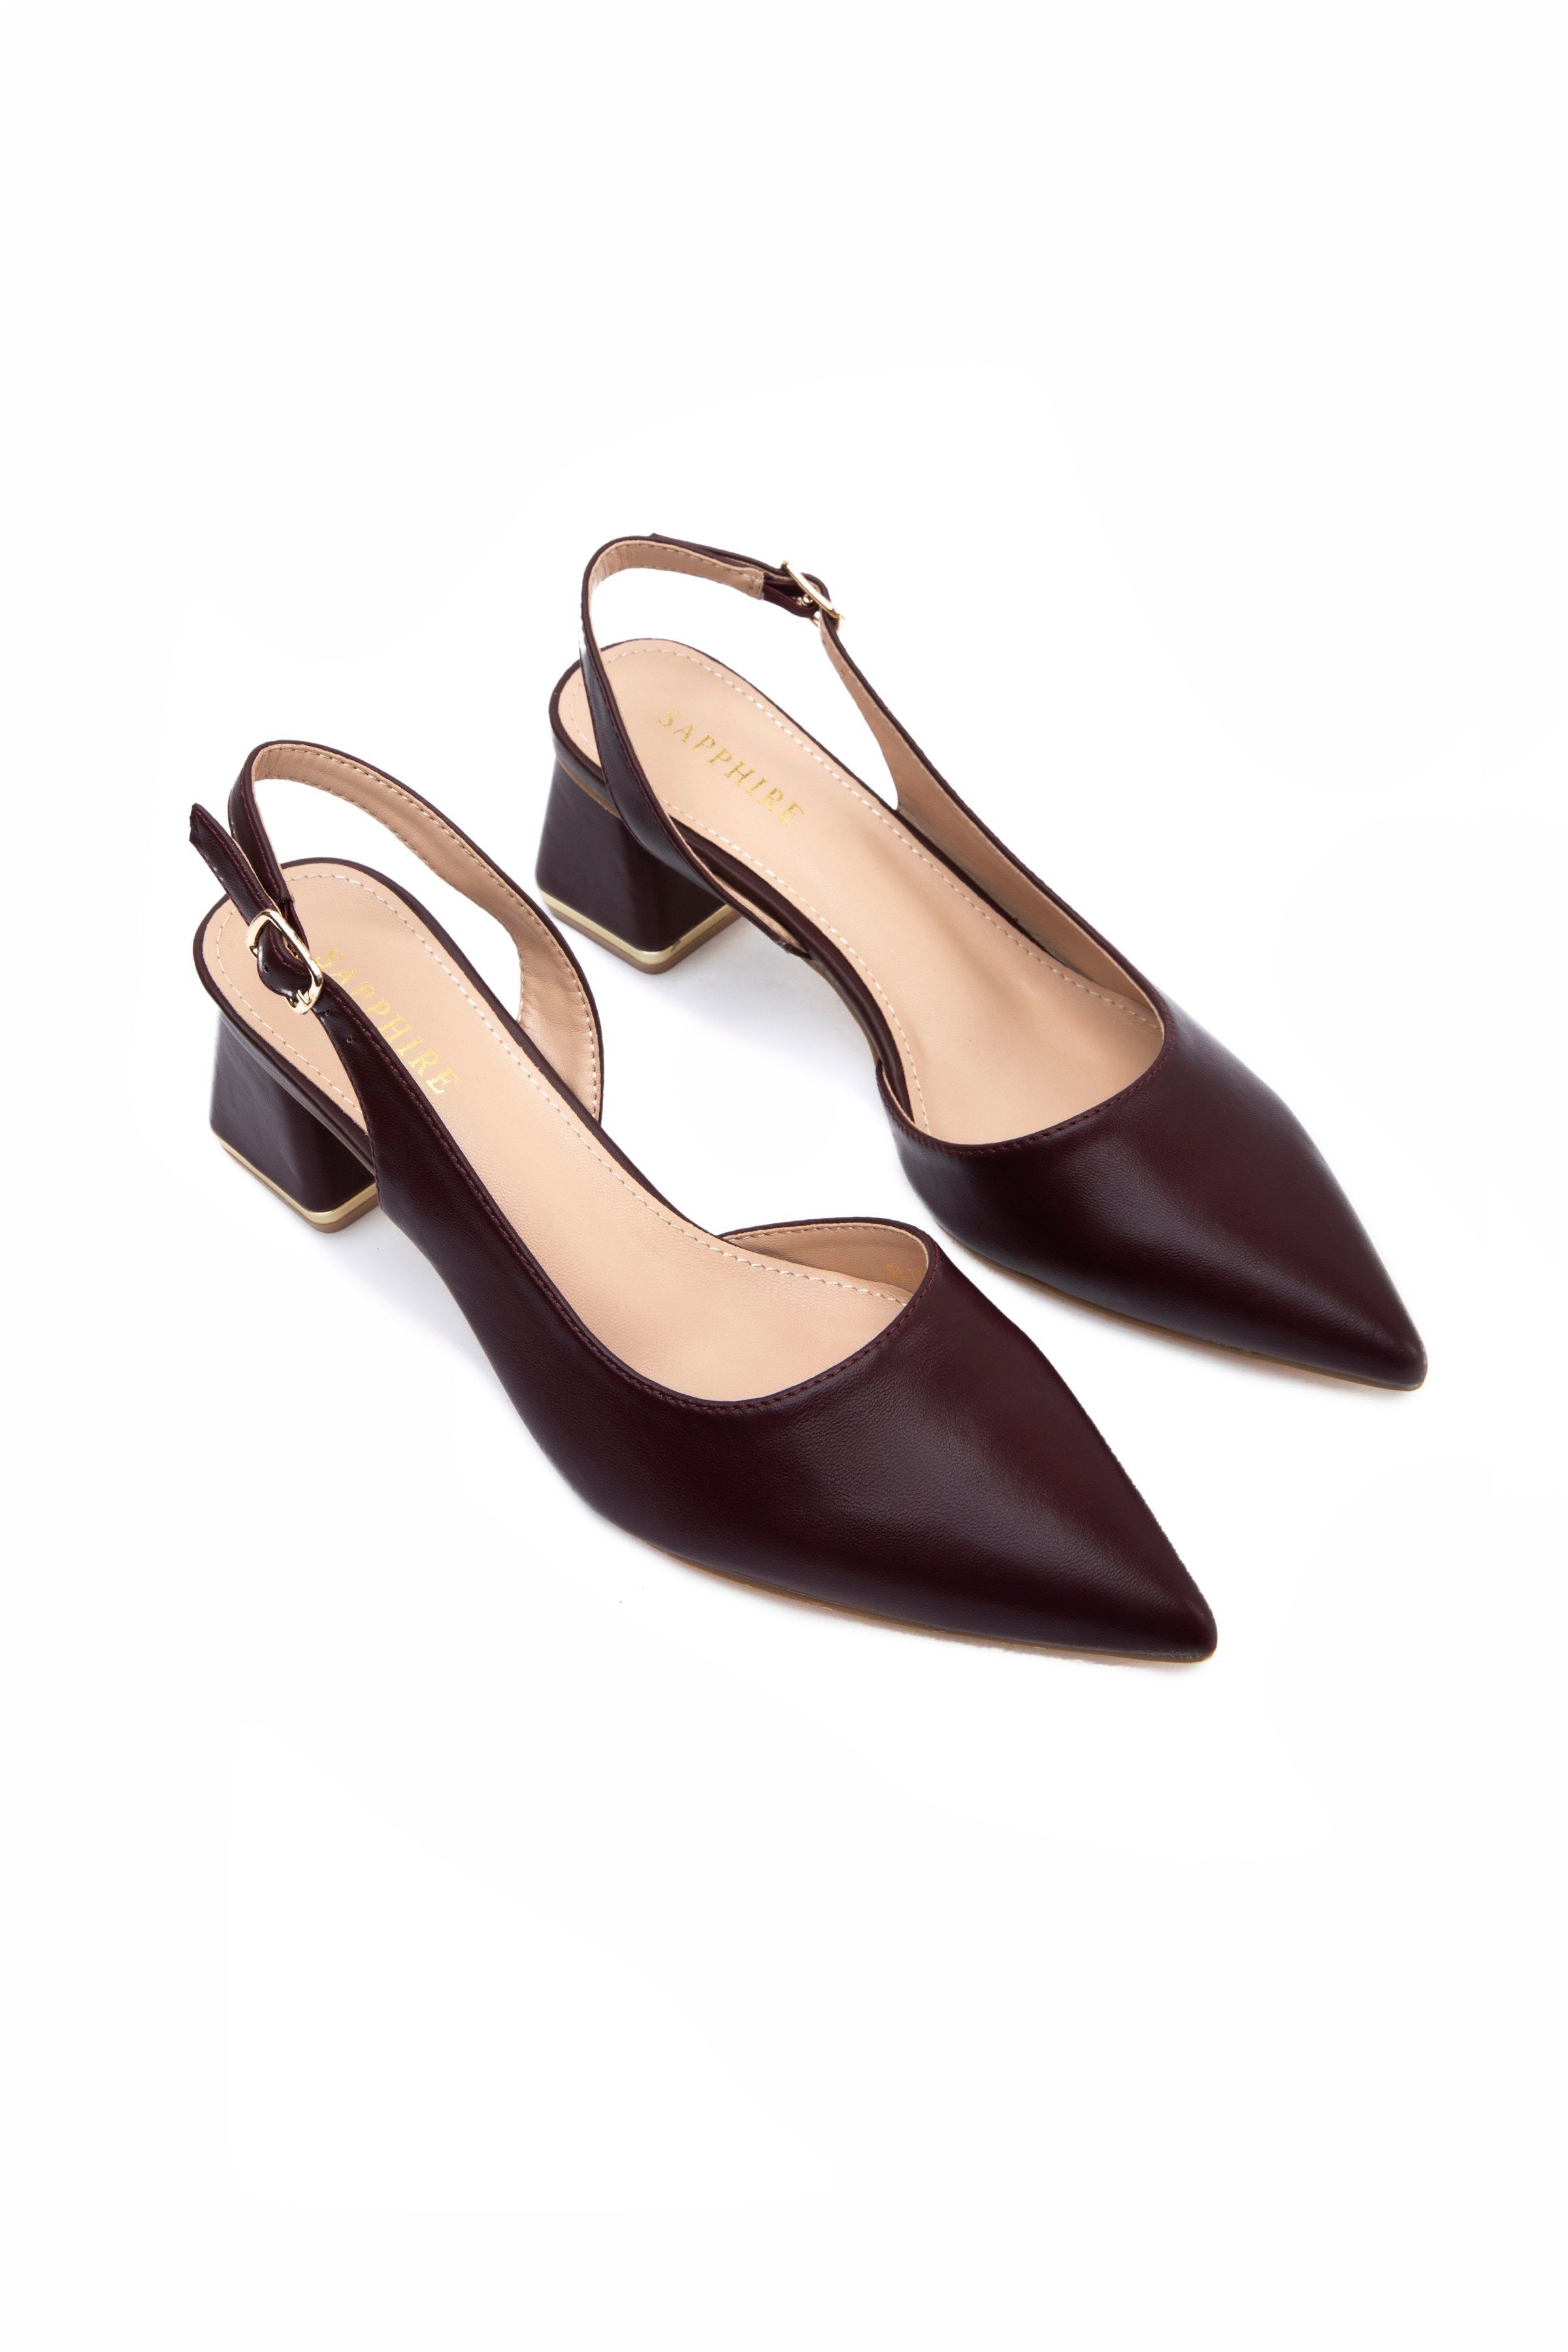 Cadee Plum Leather Heels by Diana Ferrari | Shop Online at Diana Ferrari